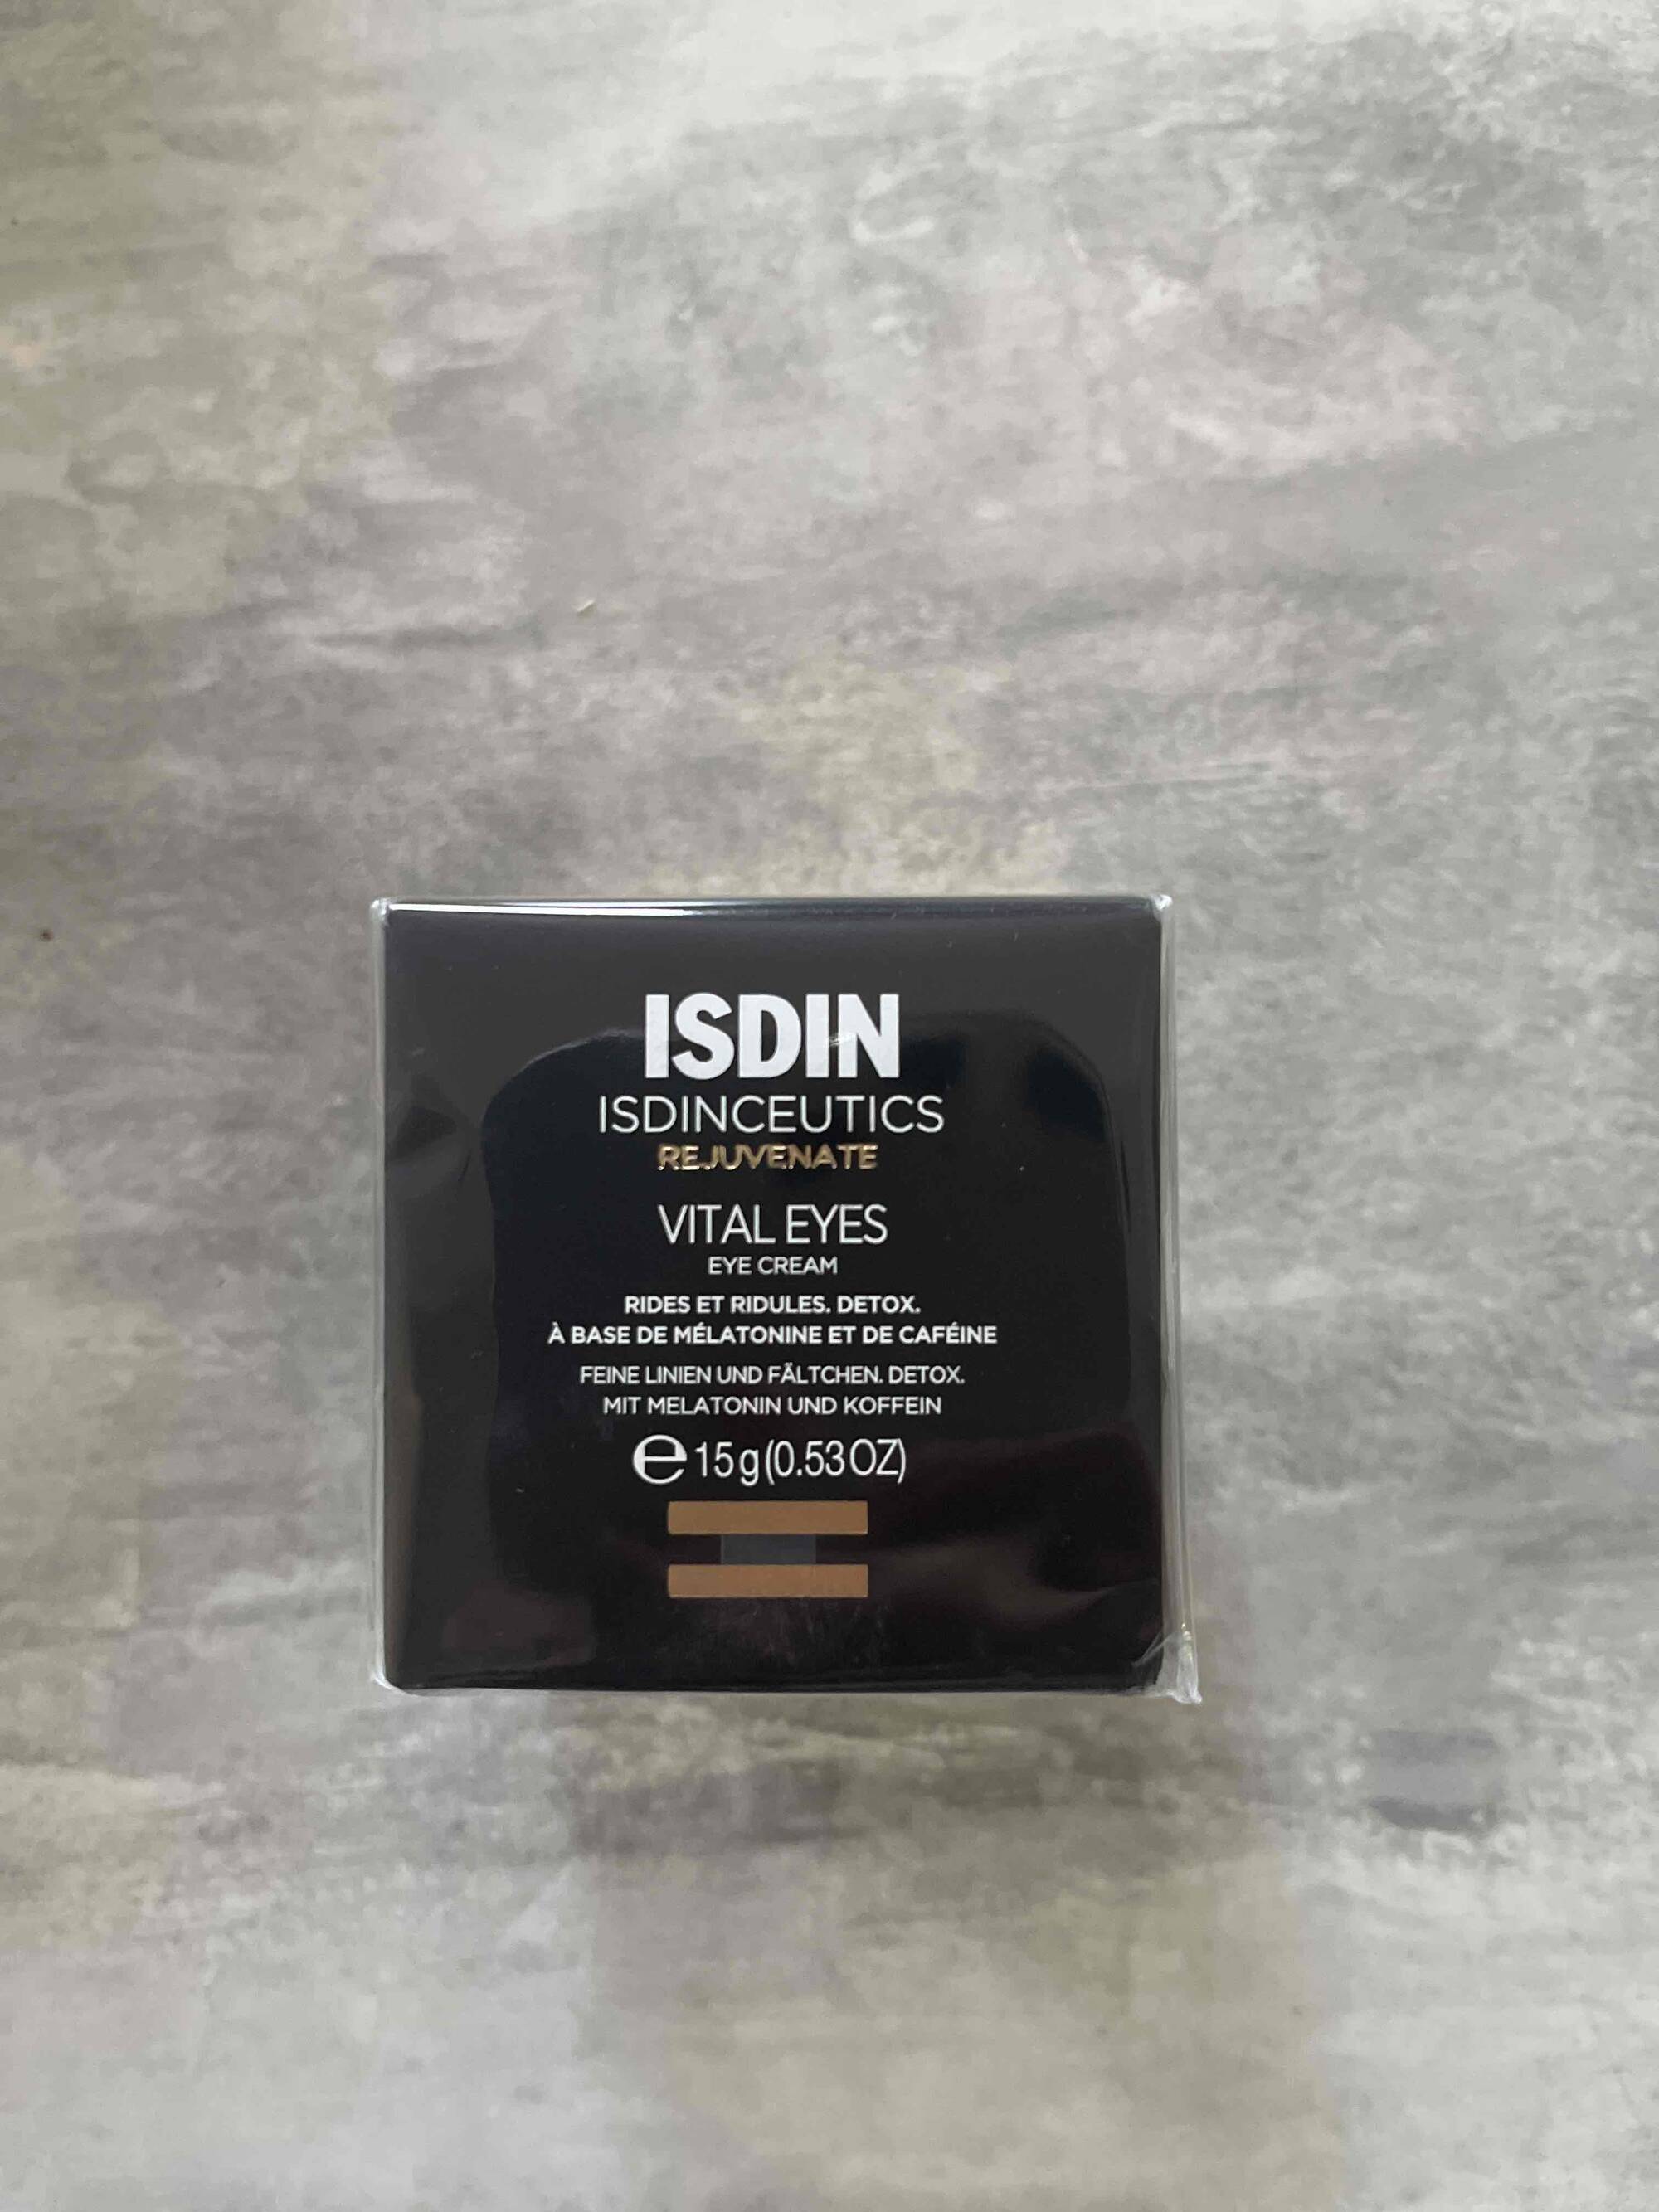 ISDIN - Vital eyes cream